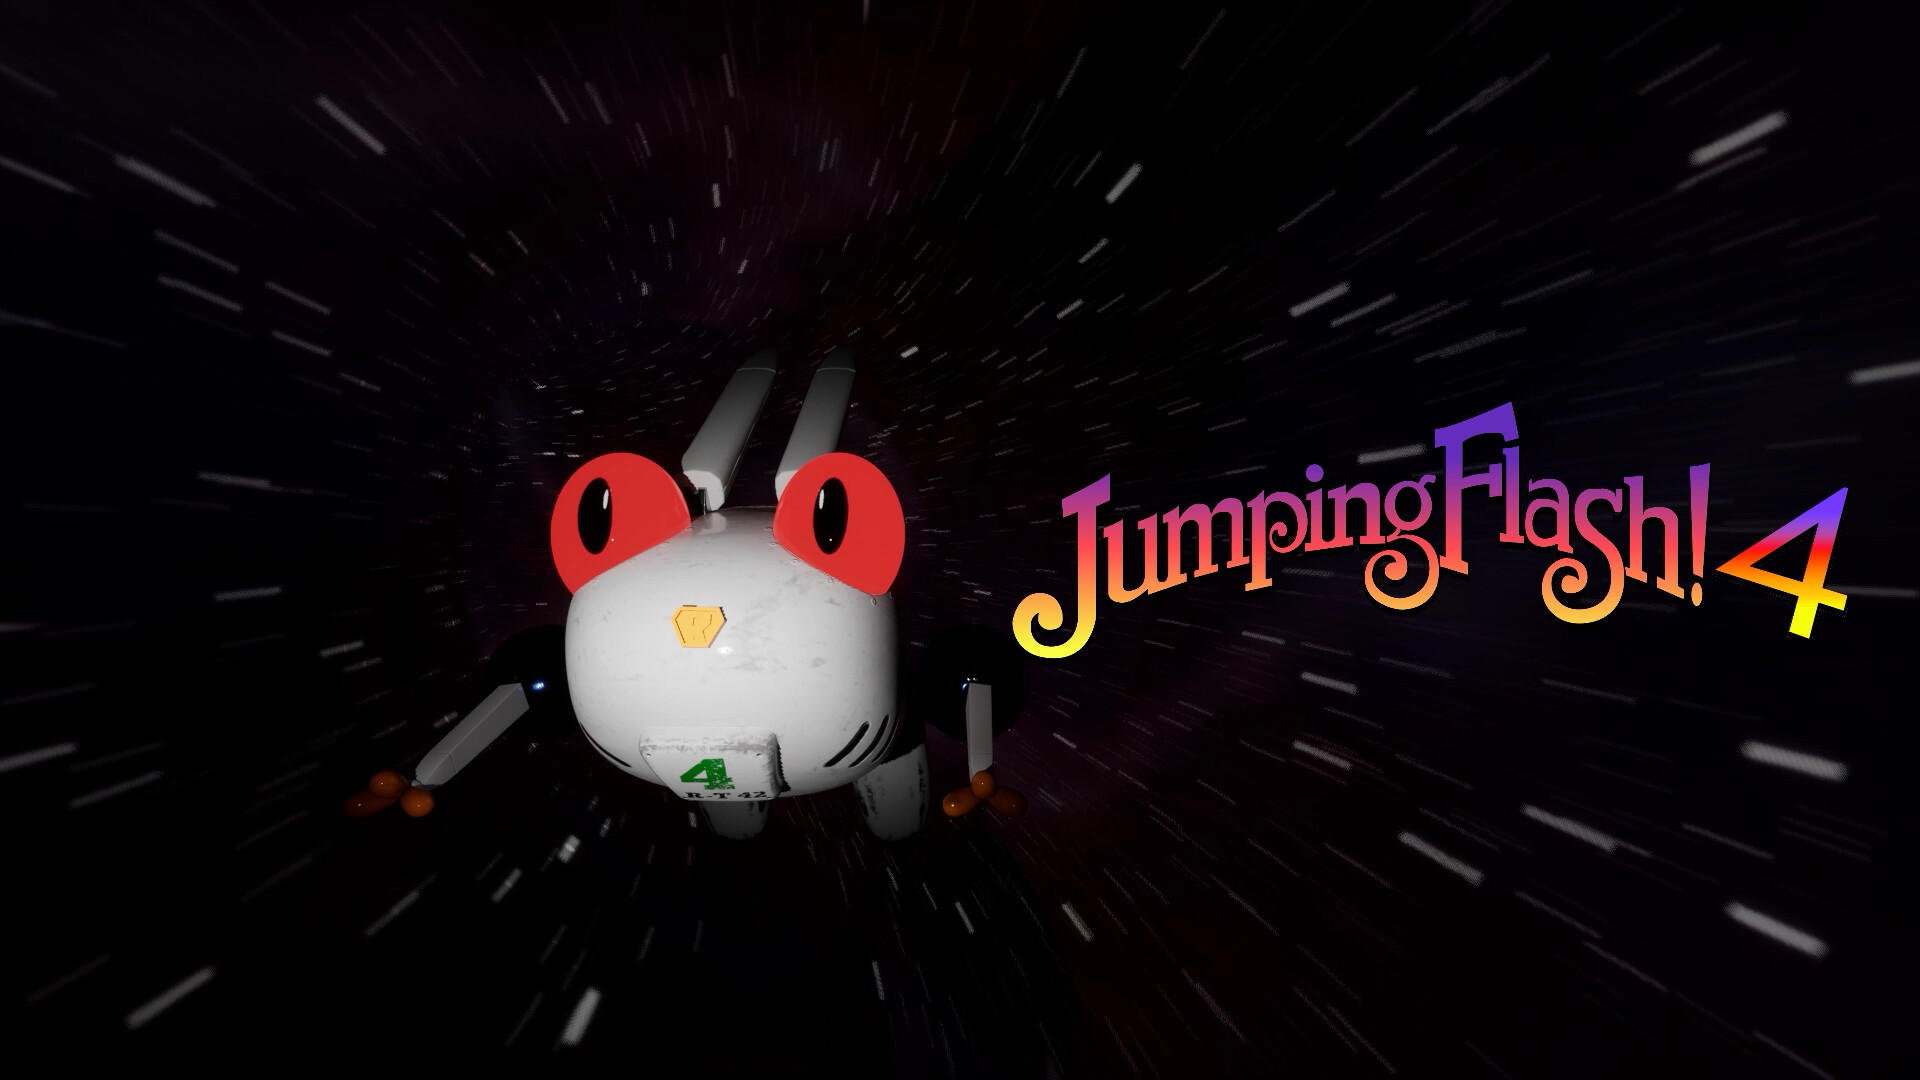 Screenshot 1 of Jumping Flash 4: Возвращение Роббита | Представление игровой концепции 